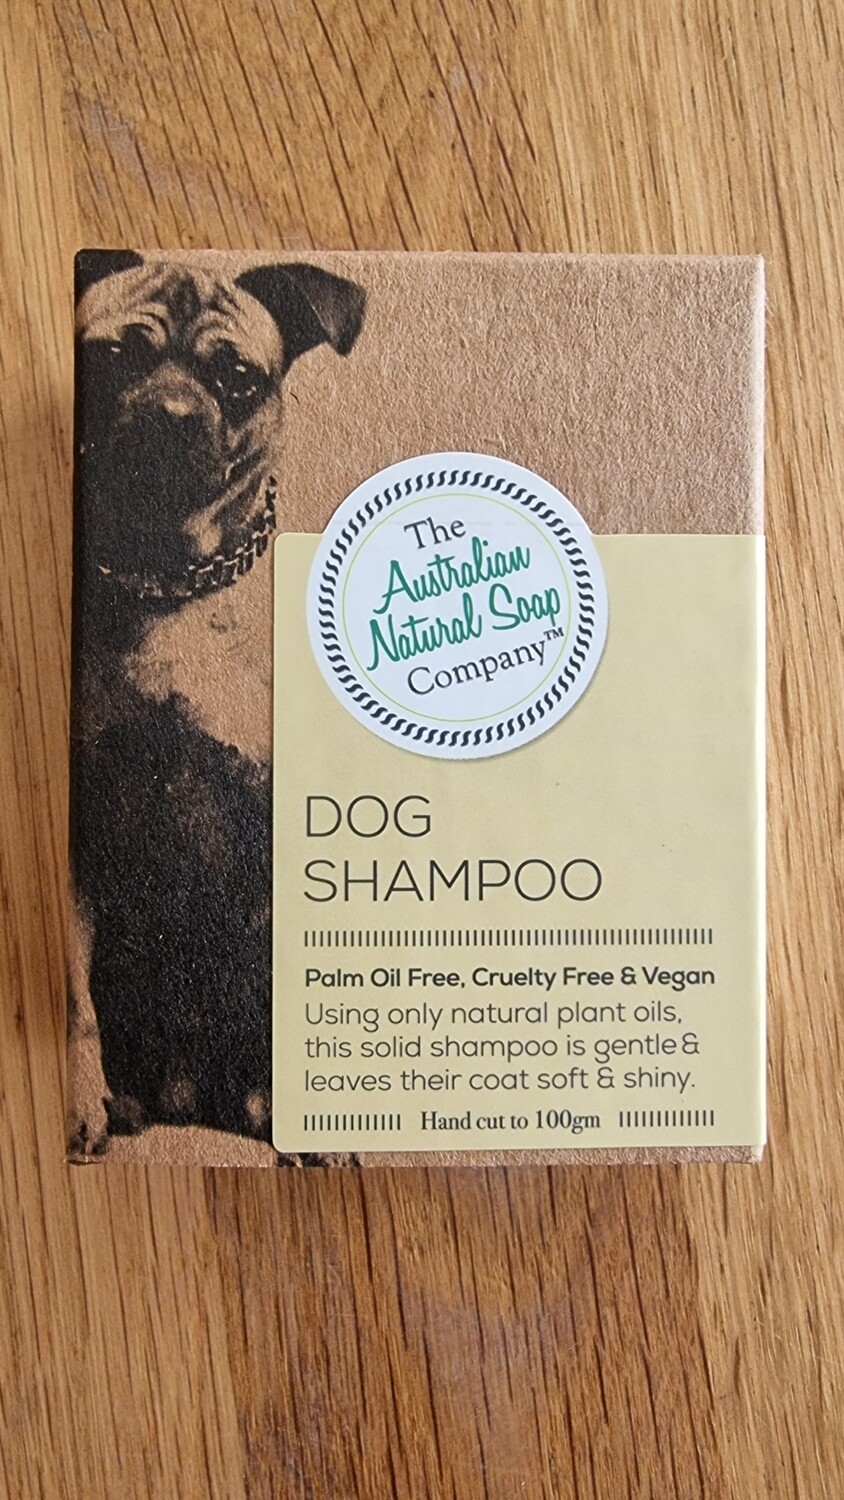 Shampoo bars for dogs